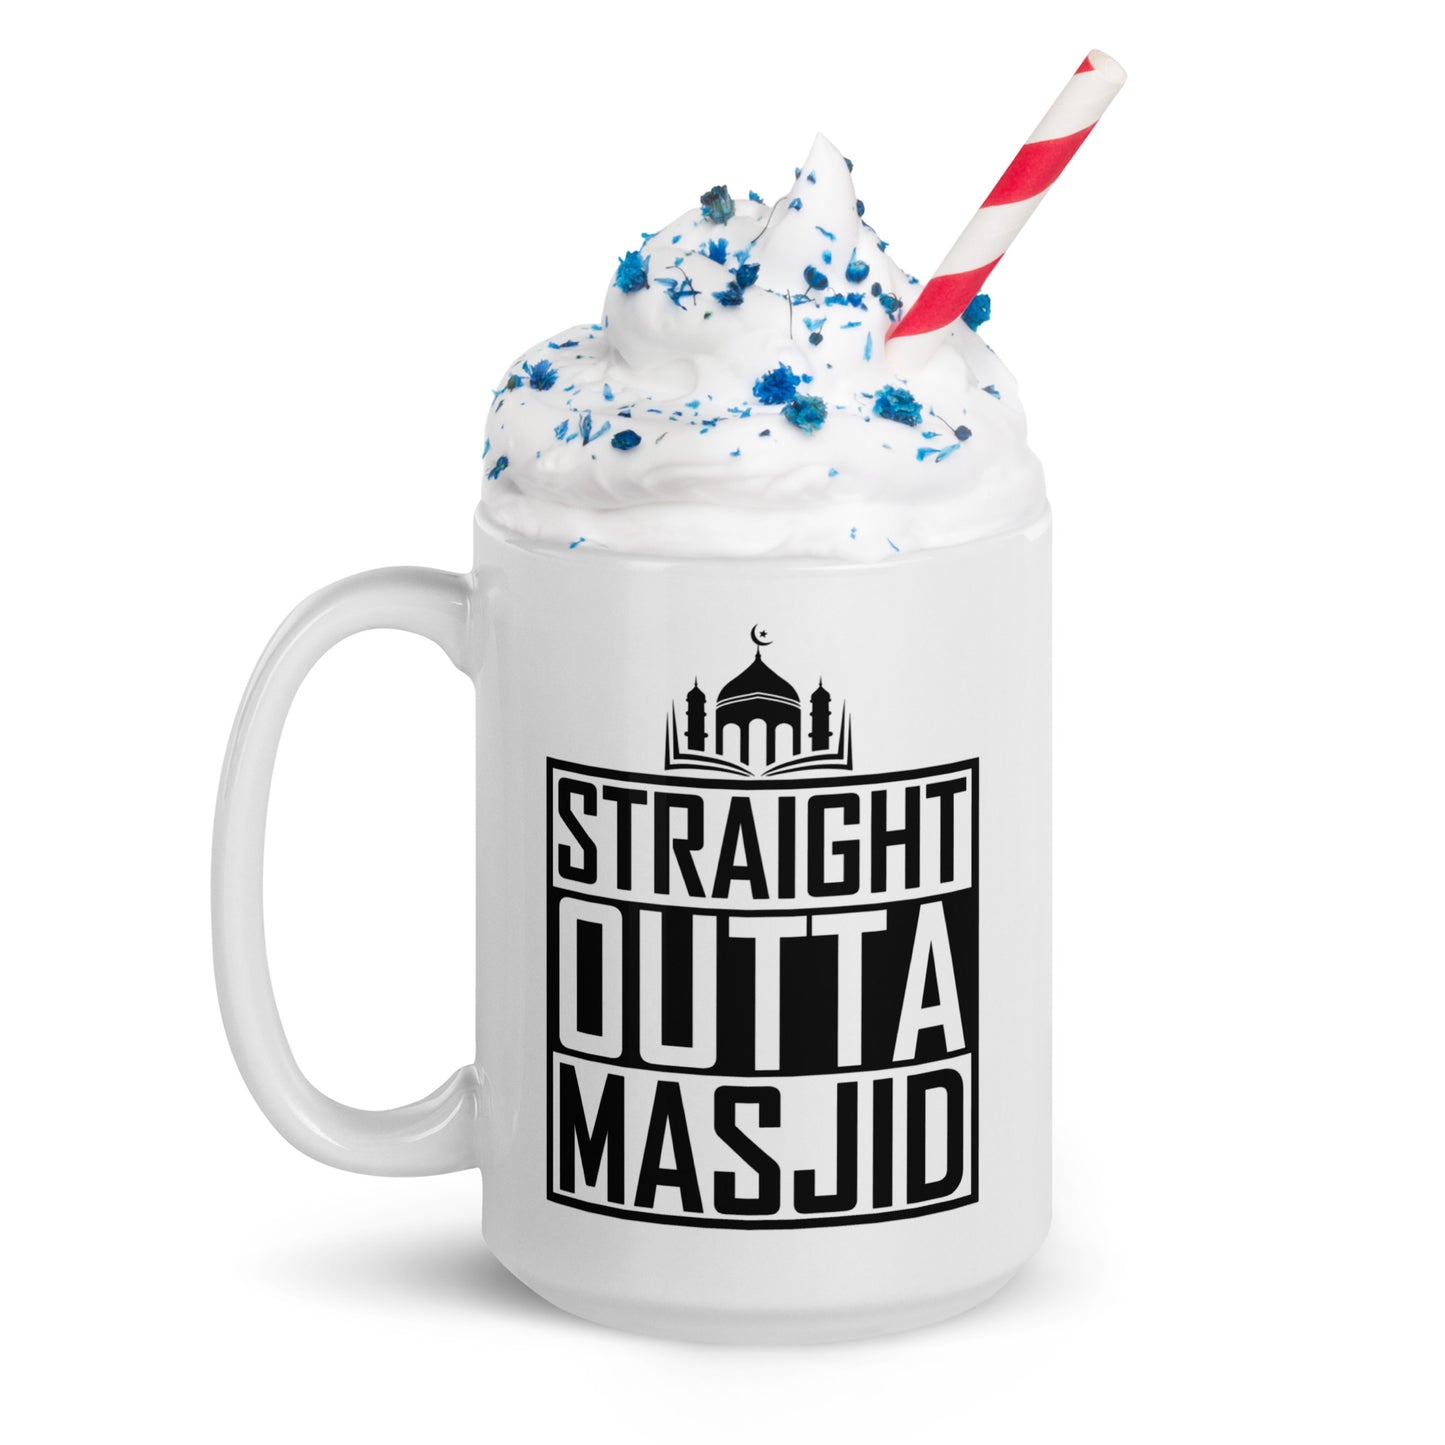 Straight Outta Masjid- White glossy mug